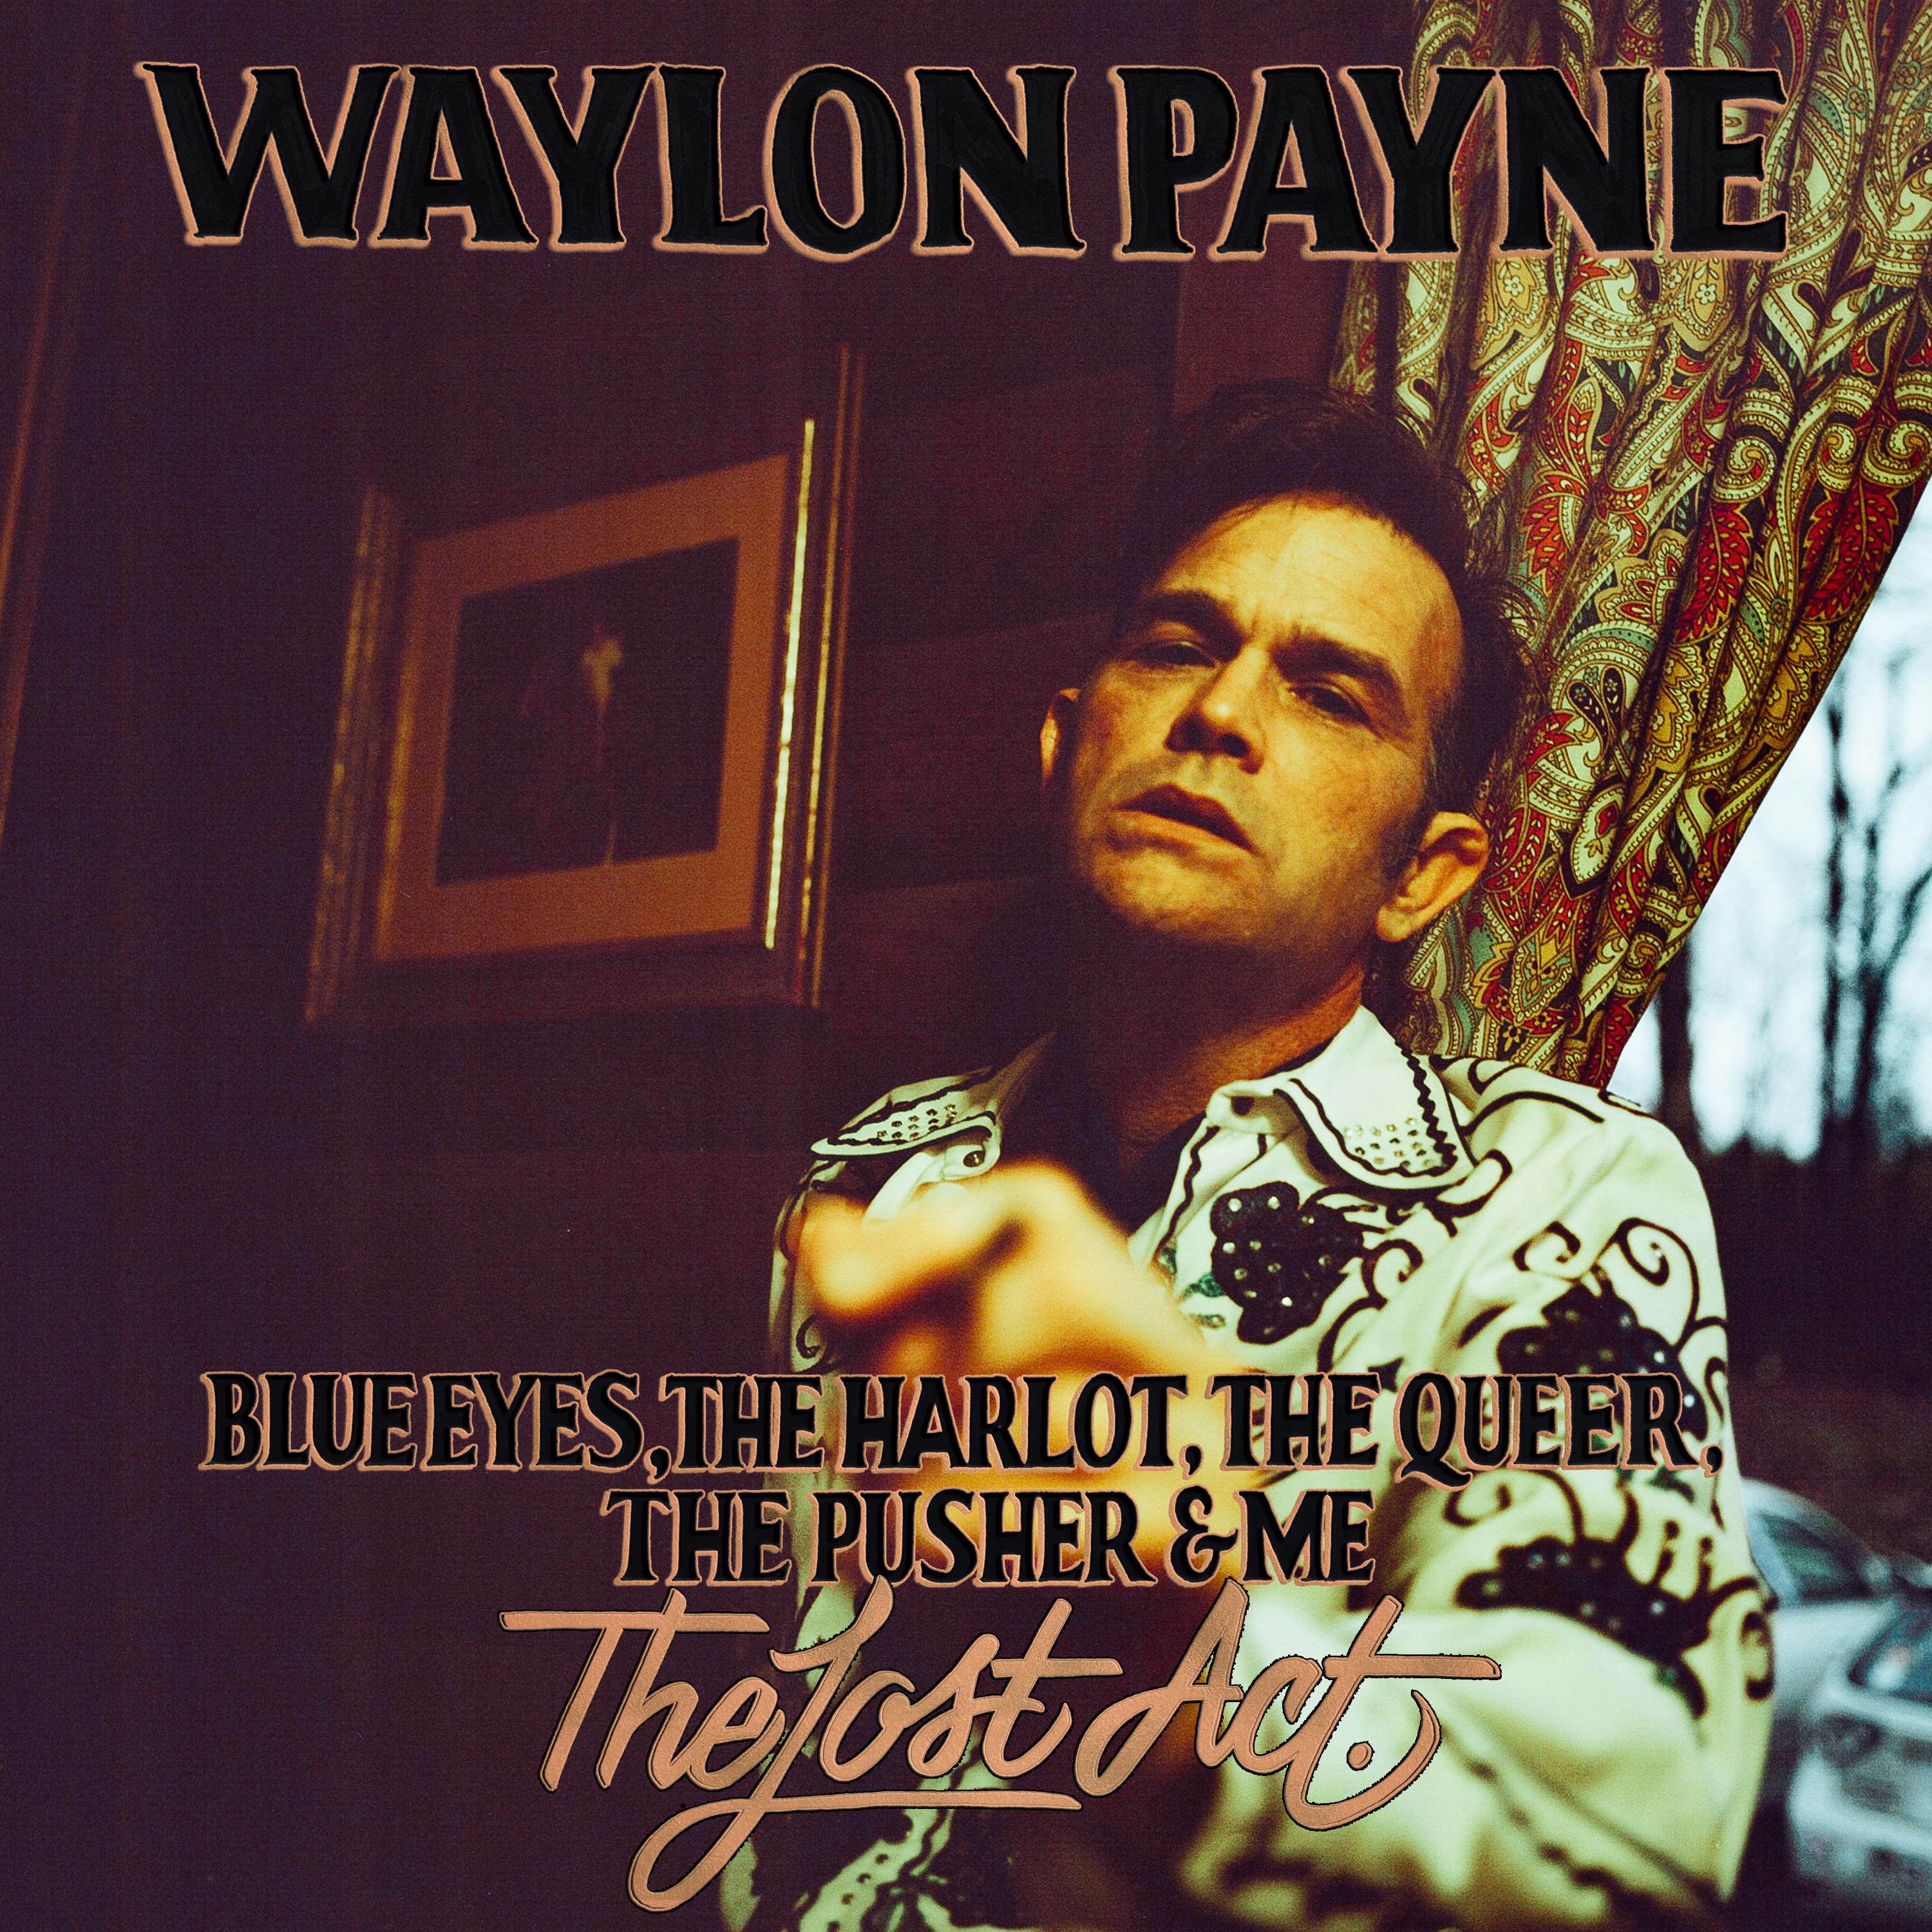 Waylon Payne - What a High Horse